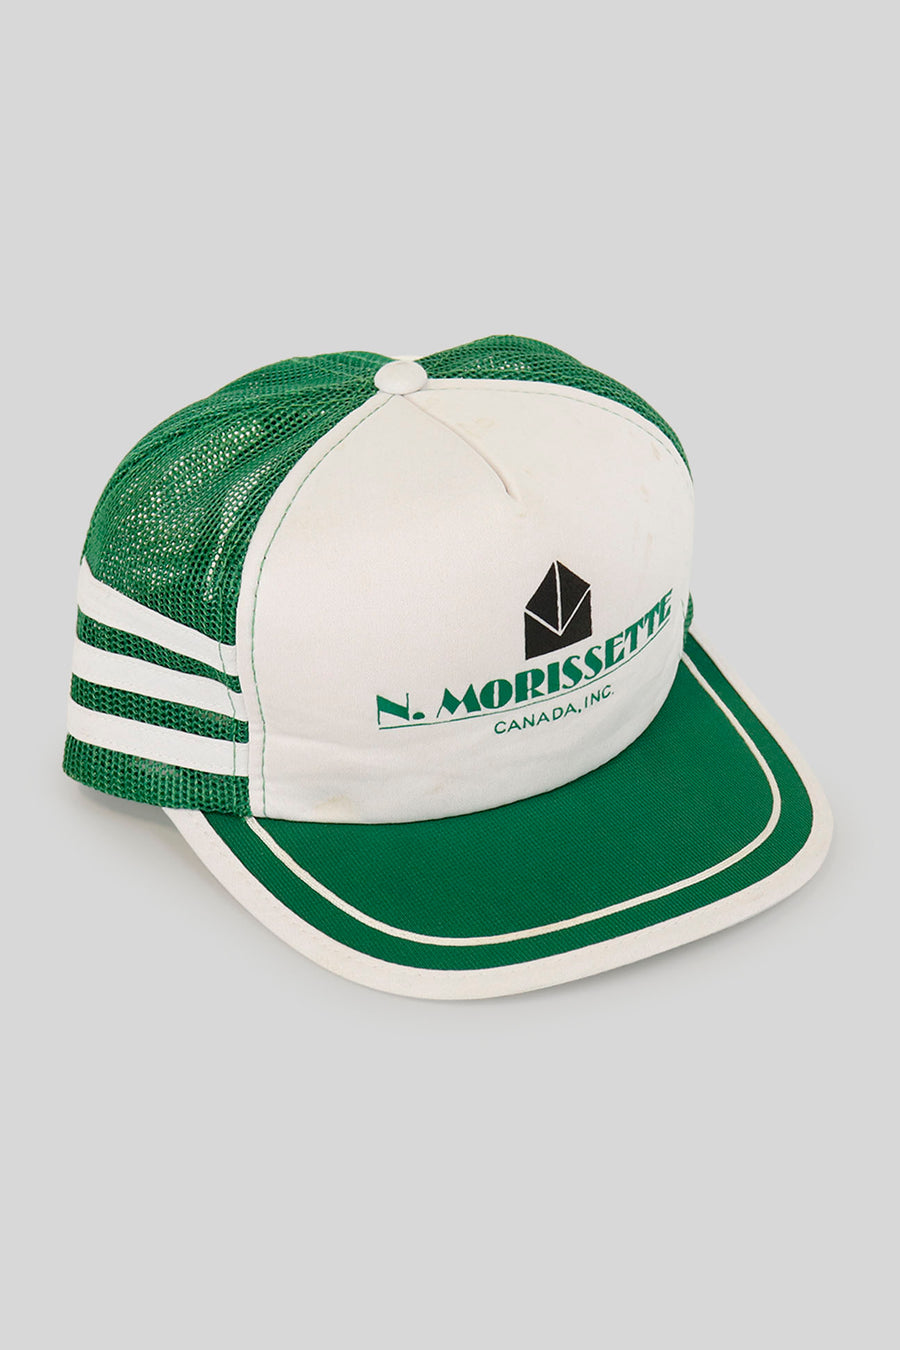 Vintage N. Morissette Canada Inc. Snapback Trucker Hat